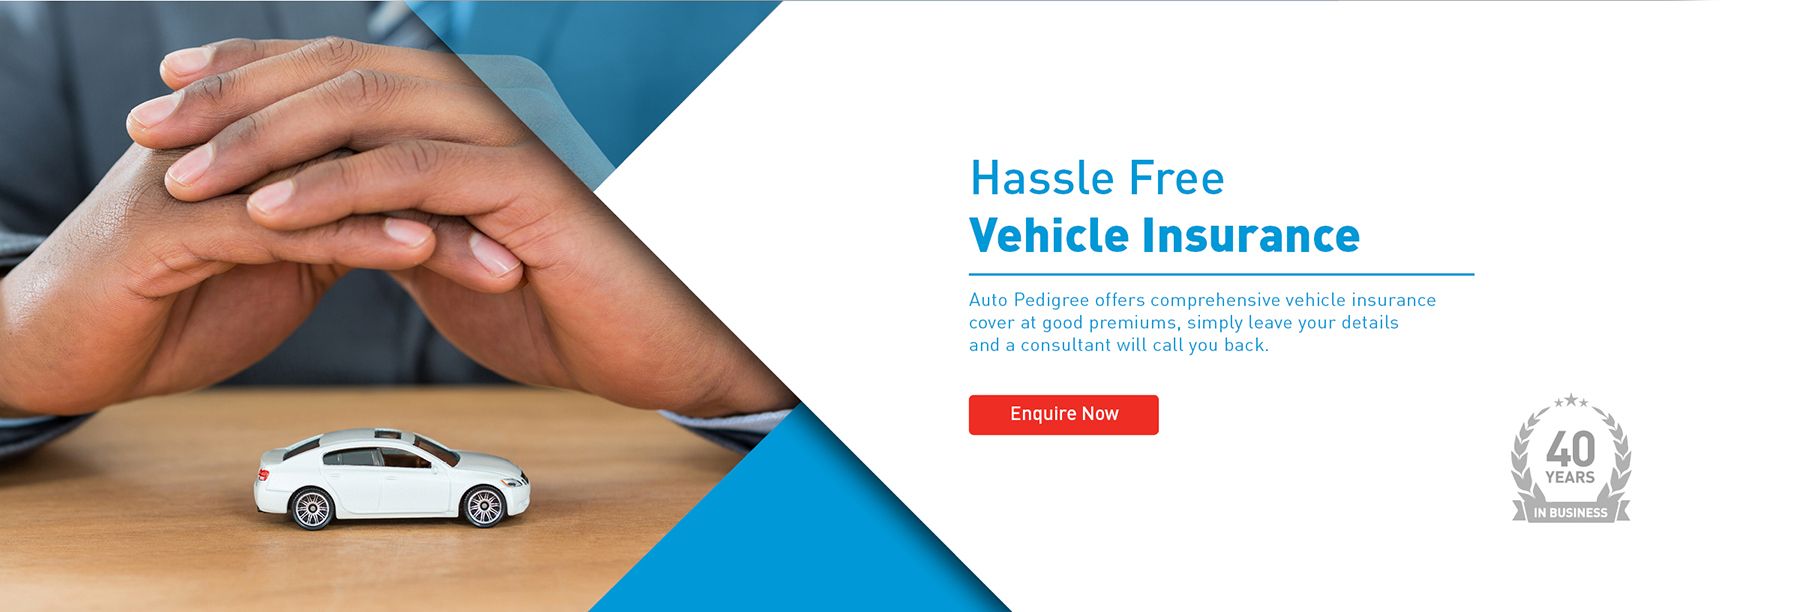 Auto Pedigree Vehicle Insurance